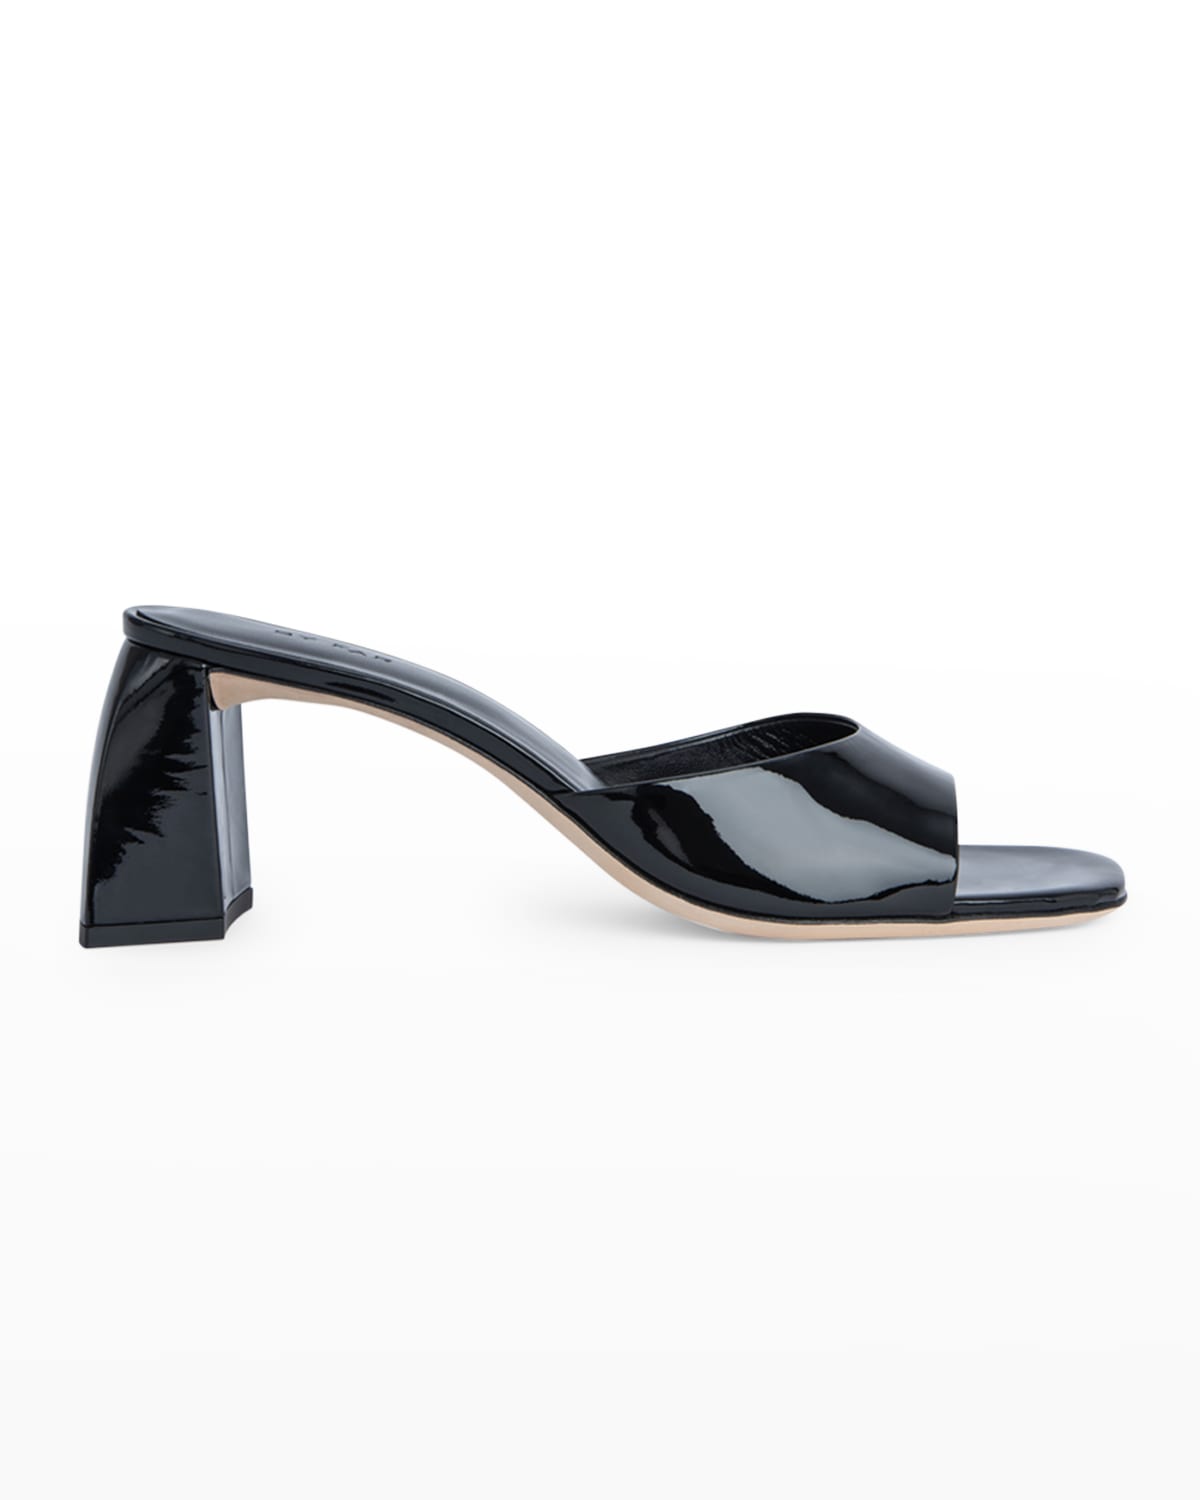 BY FAR Michele Metallic Heeled Mule Sandals | Neiman Marcus